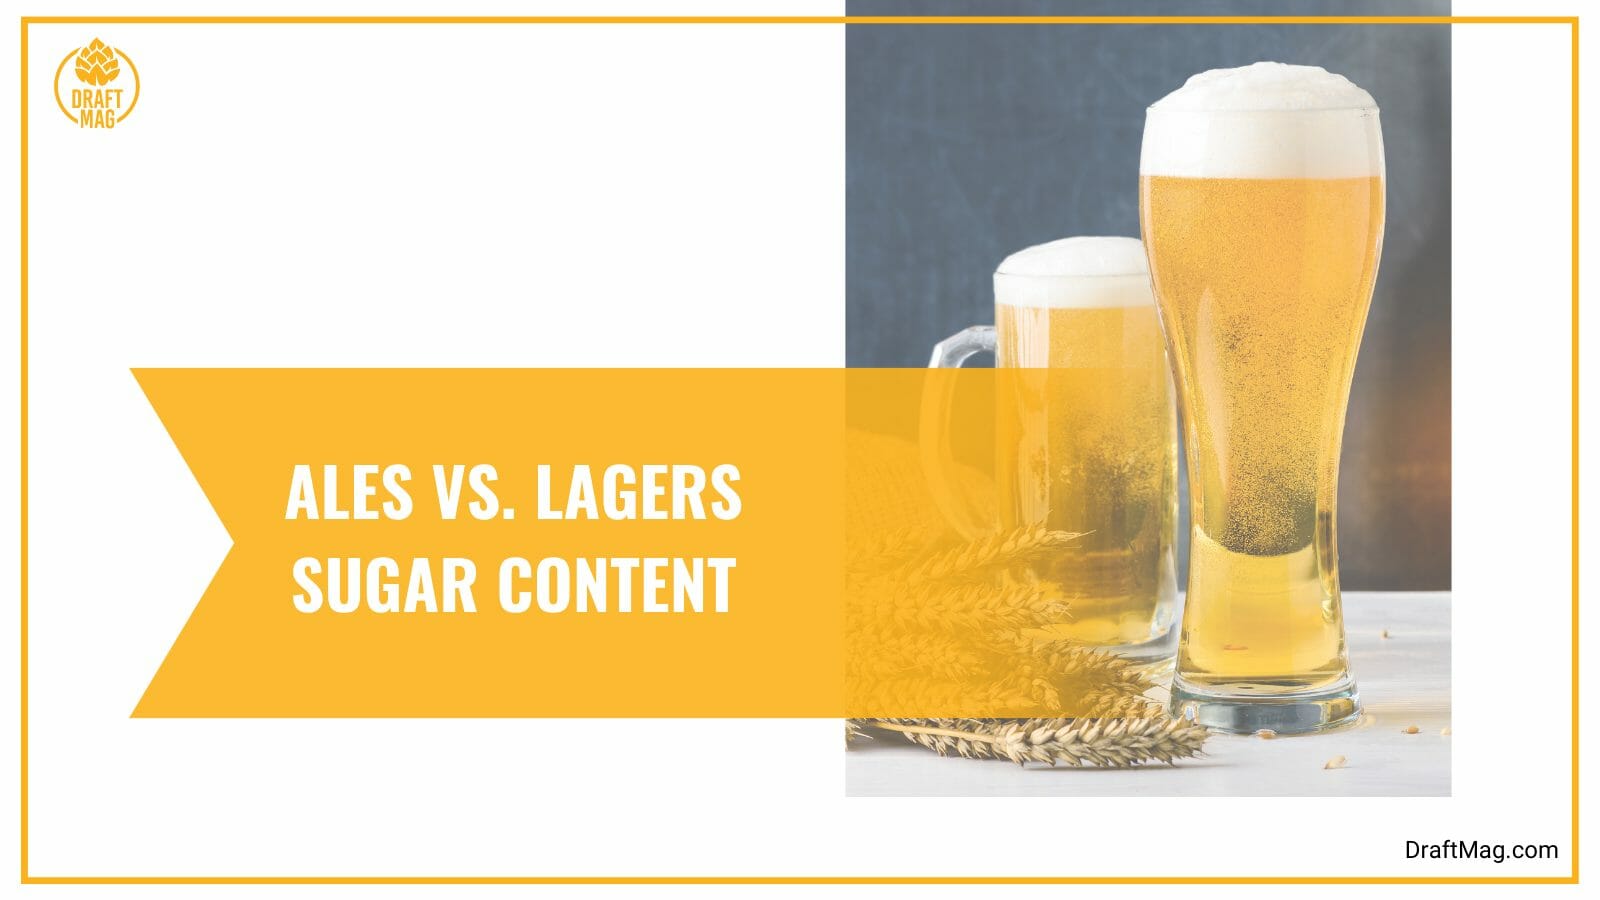 Ales vs lagers sugar content